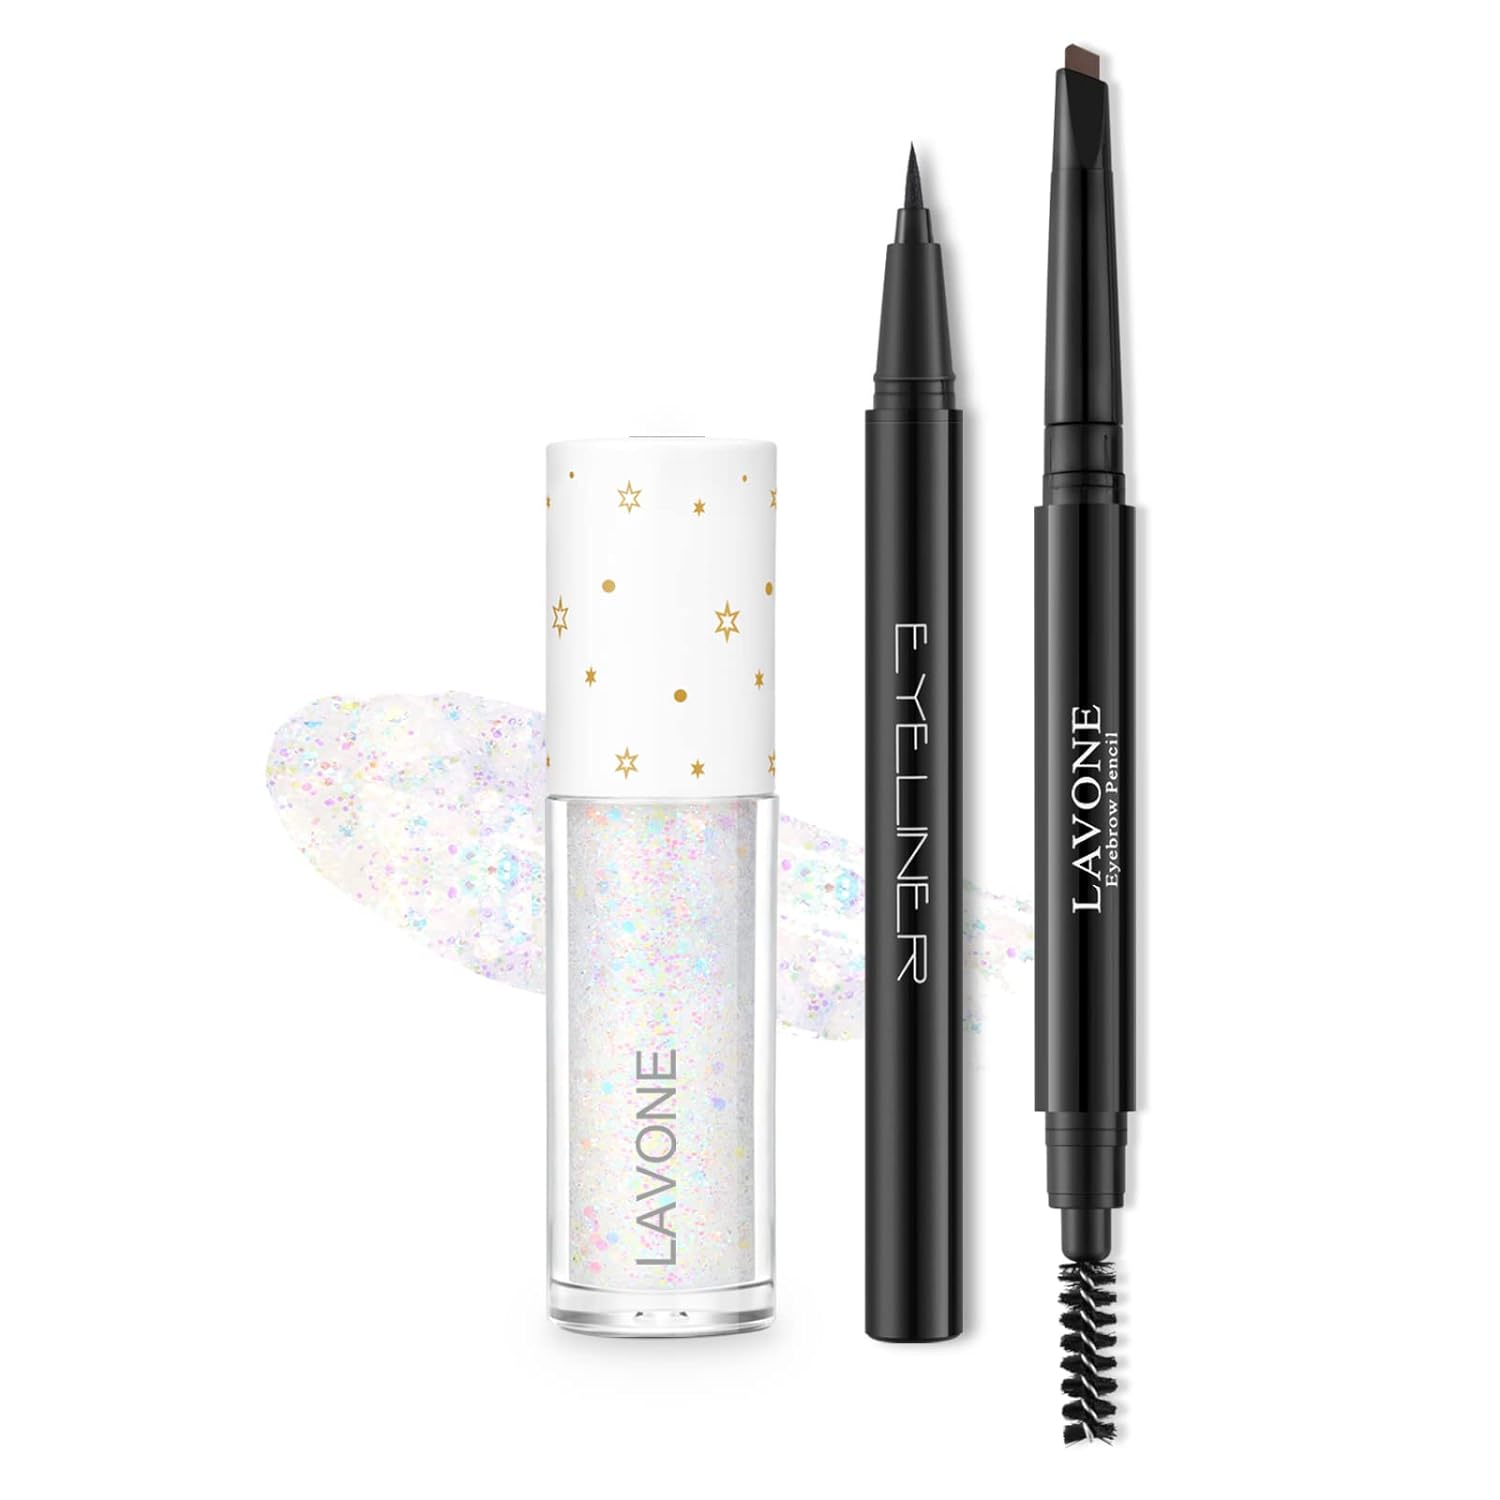 Eyebrow Makeup Kit - Make up Brow Kit with Waterproof Eyebrow Pencil, Eyeliner, Glitter Eyeshadow. Korean Makeup Under Eye Shadow Bling, Pigmented, Long Lasting, Quick Drying - Galaxy